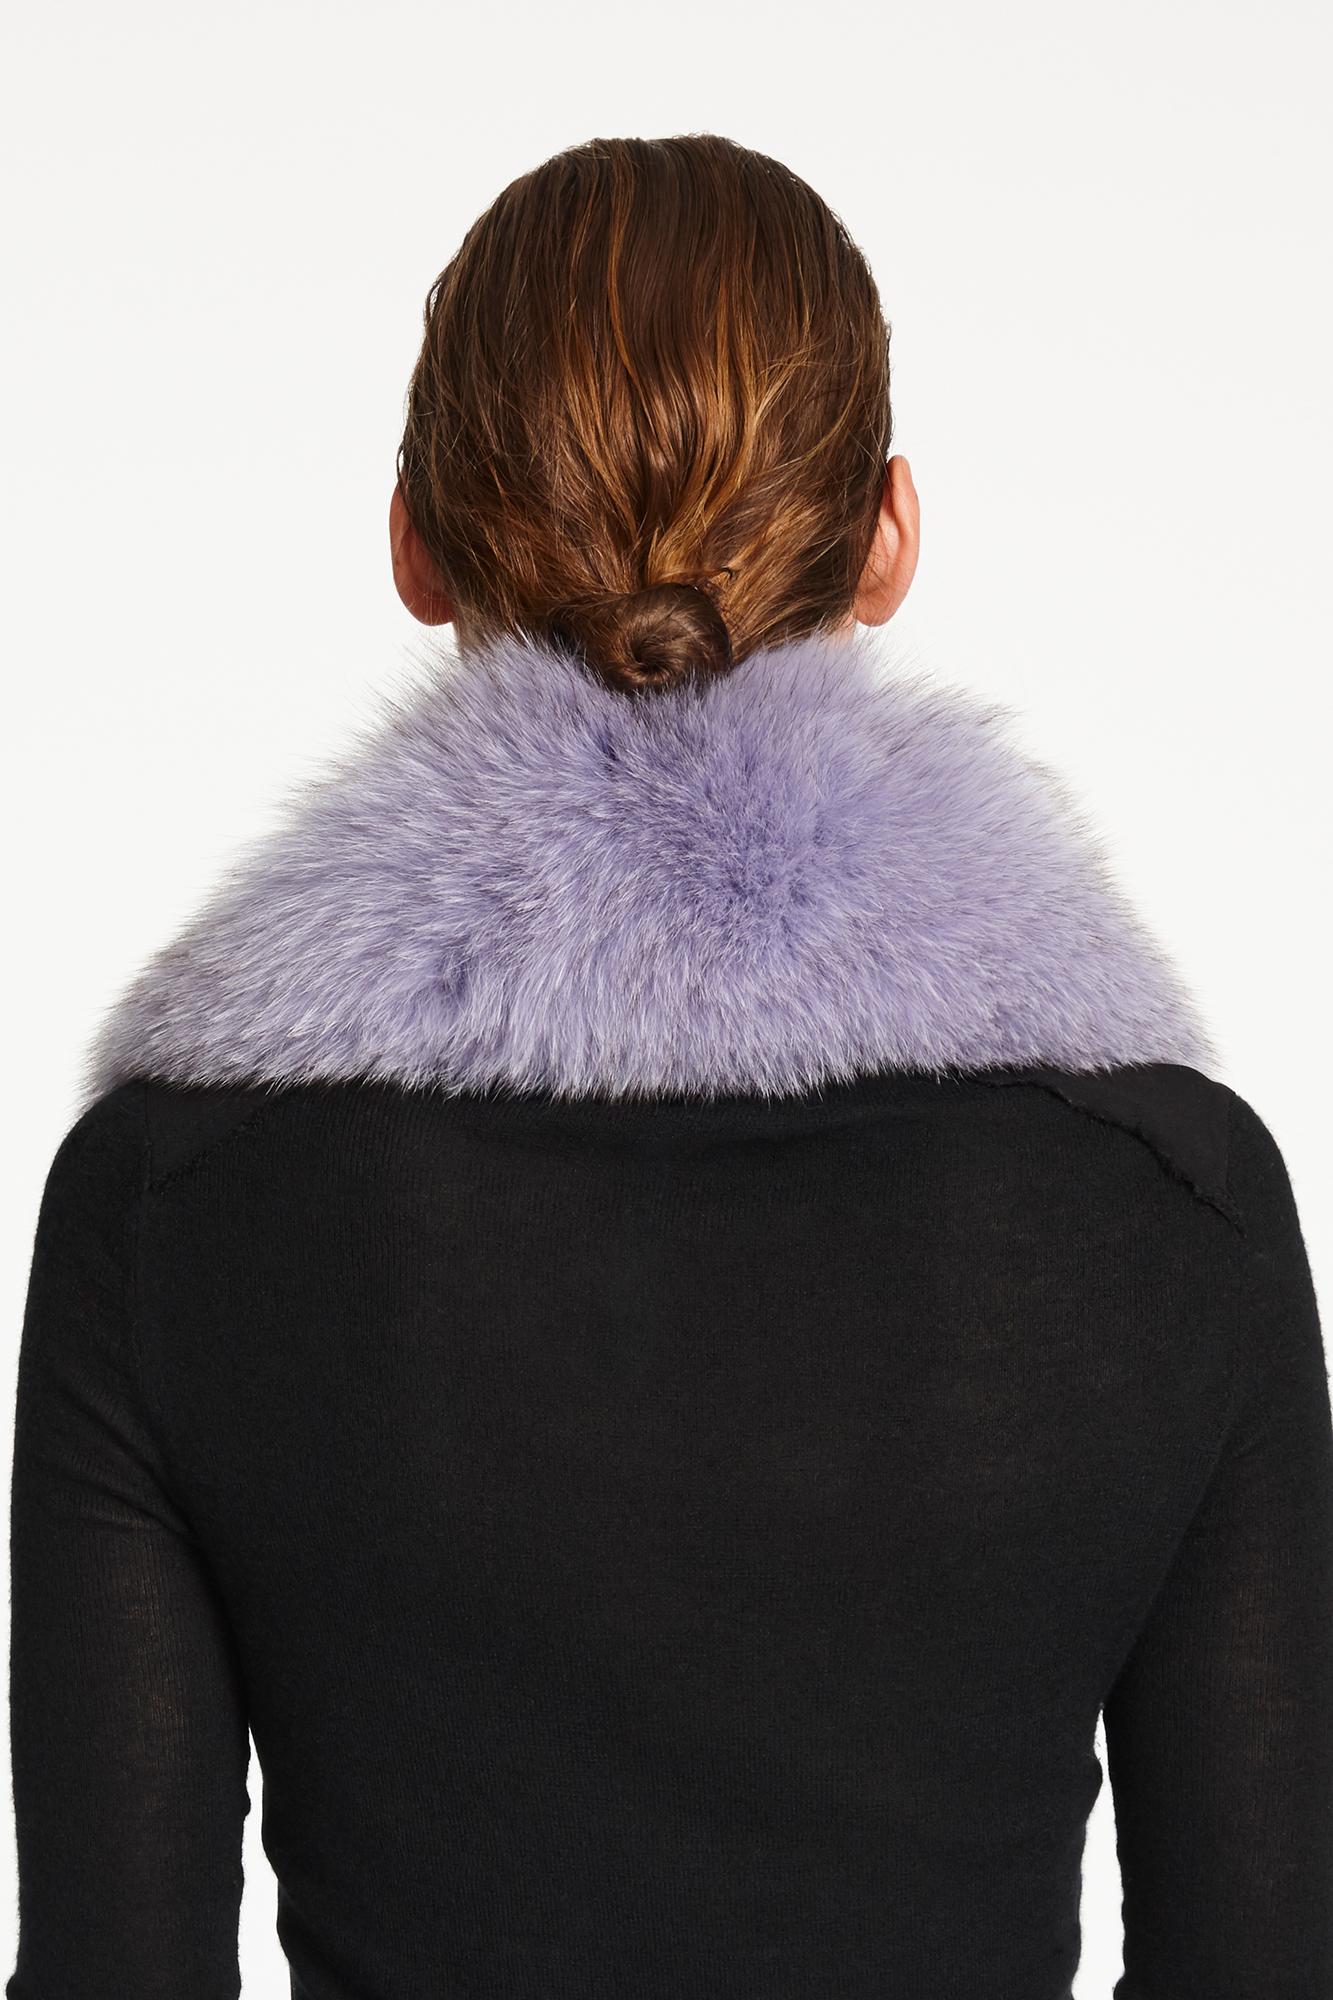 Verheyen London Peter Pan Collar in Lilac Fox Fur and lined in silk  3